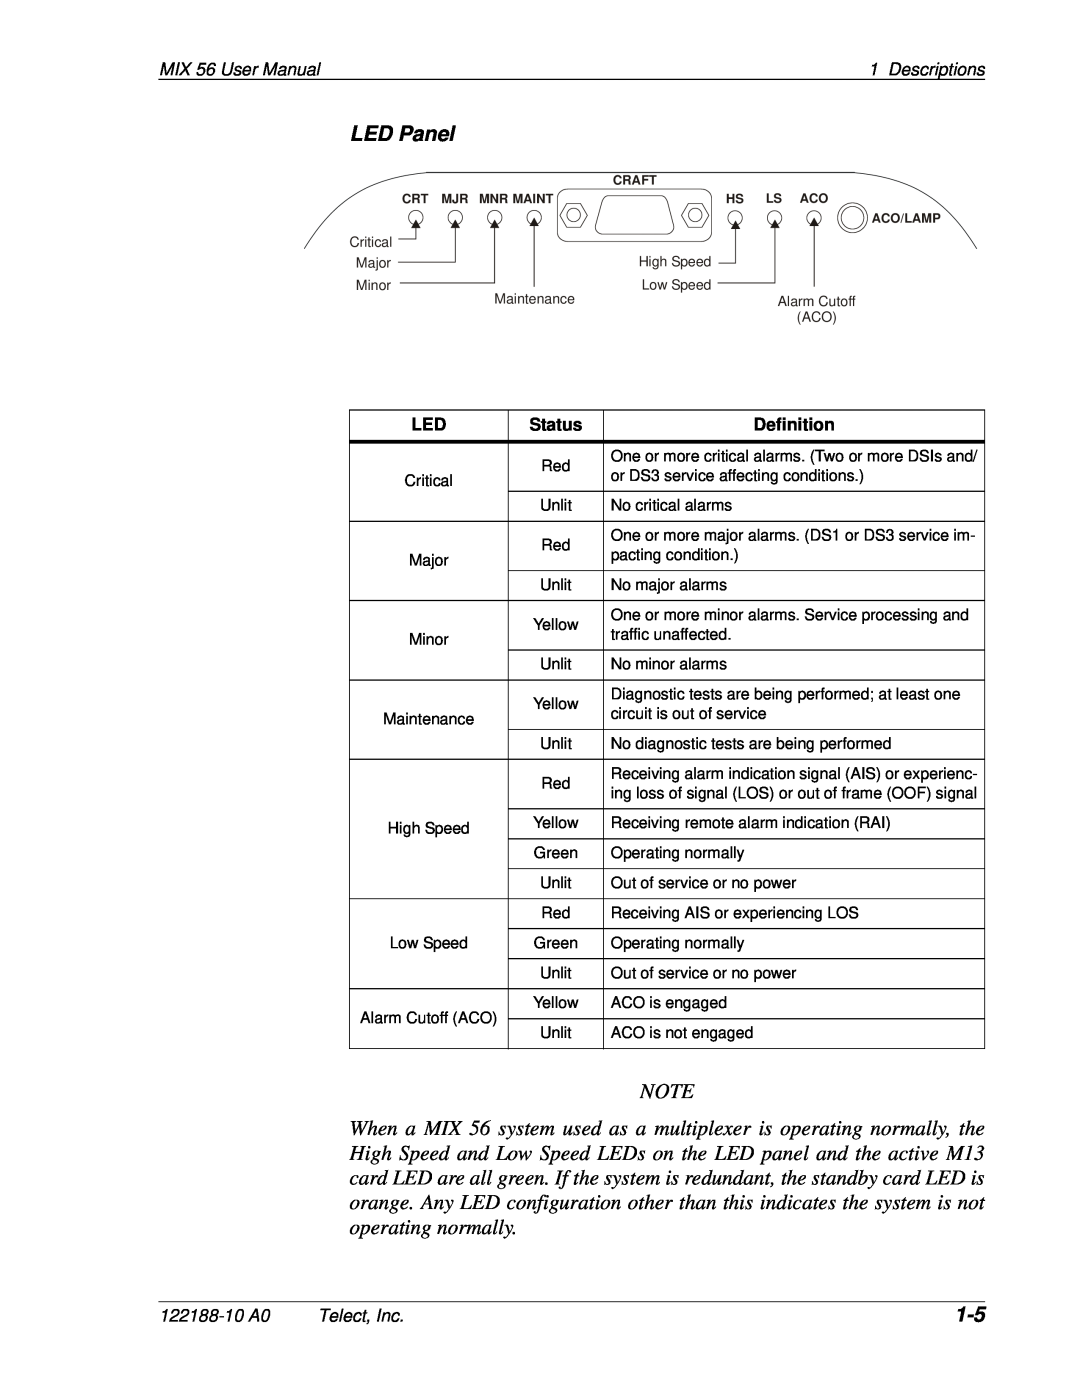 Telect user manual LED Panel, MIX 56 User Manual1 Descriptions, Status, Definition, 122188-10 A0, Telect, Inc 